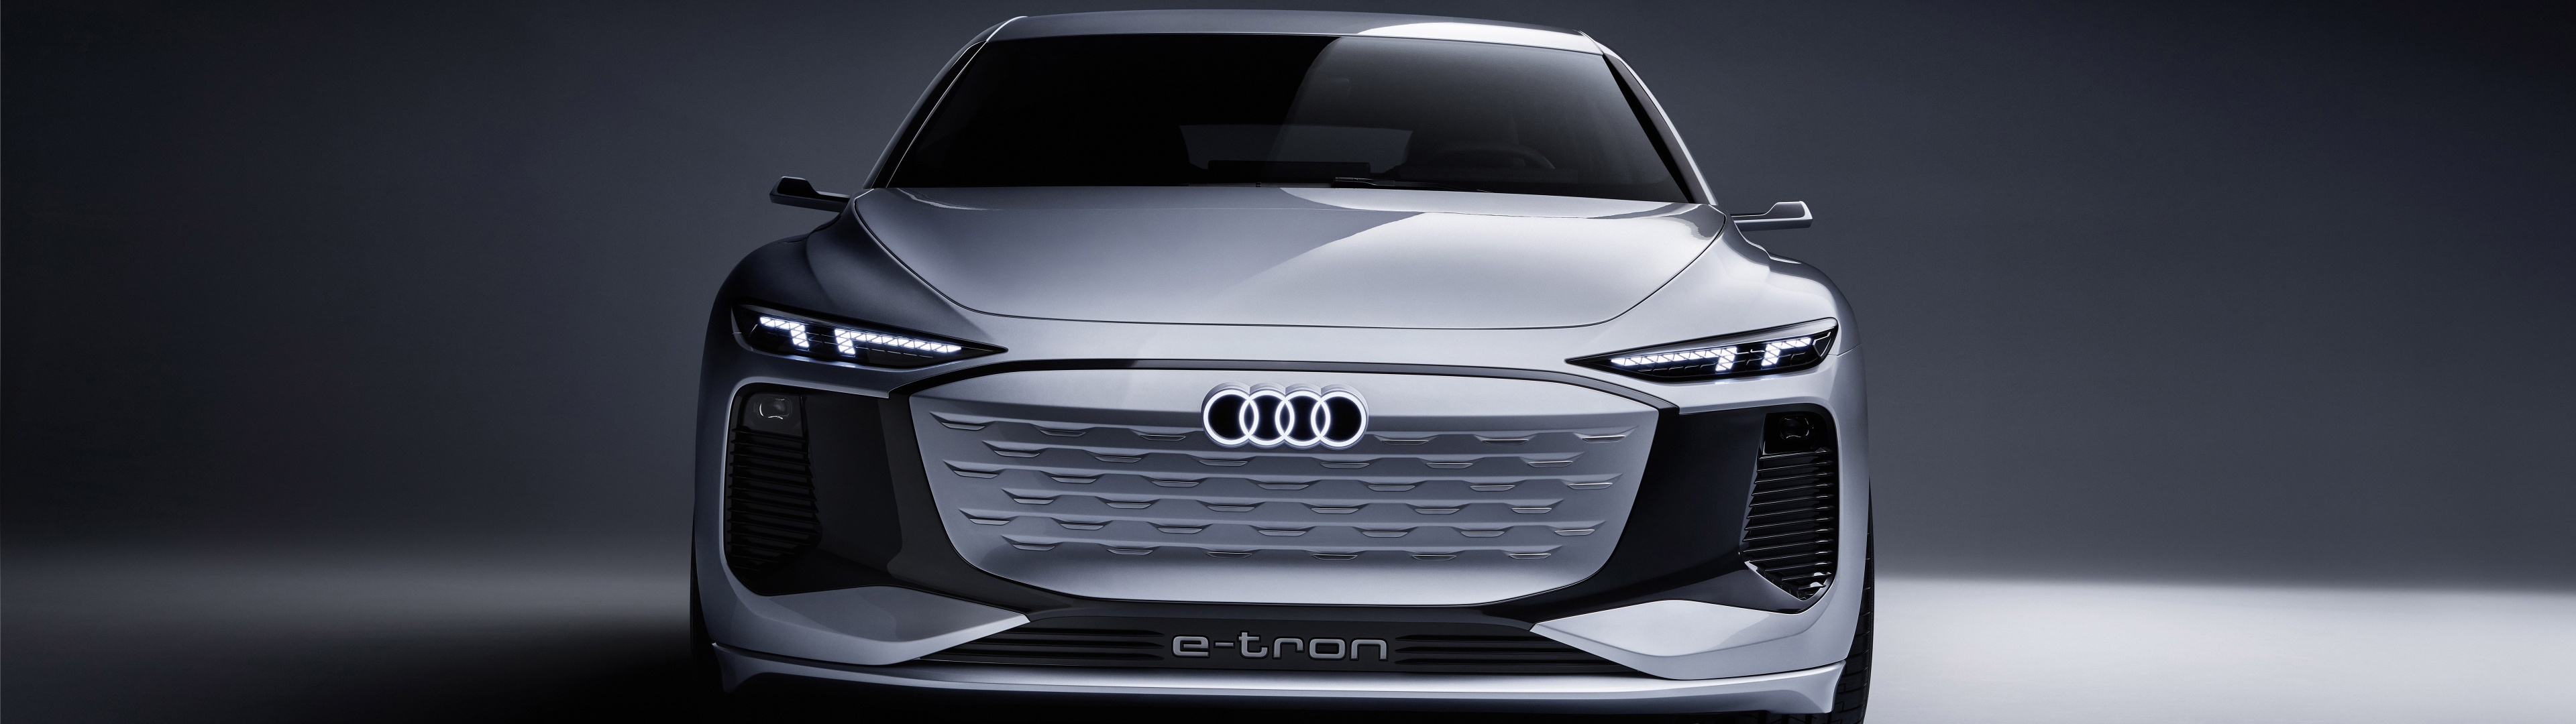 Audi A6 e-tron Concept Wallpaper 4K, 8K, Electric cars, 2021